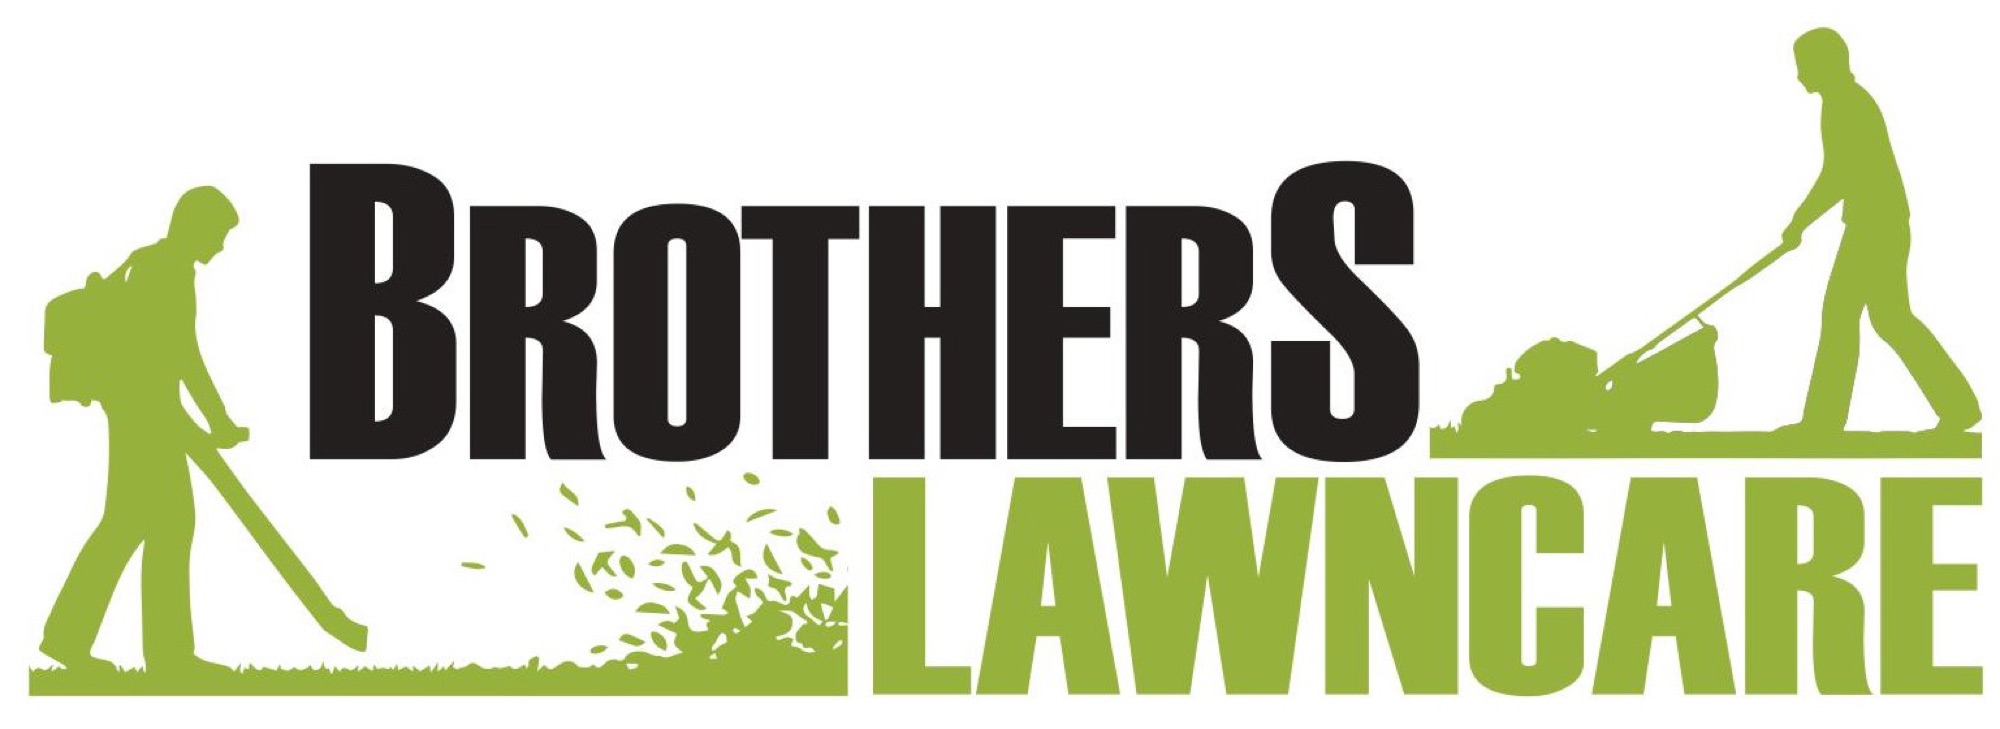 Brothers Lawncare Logo